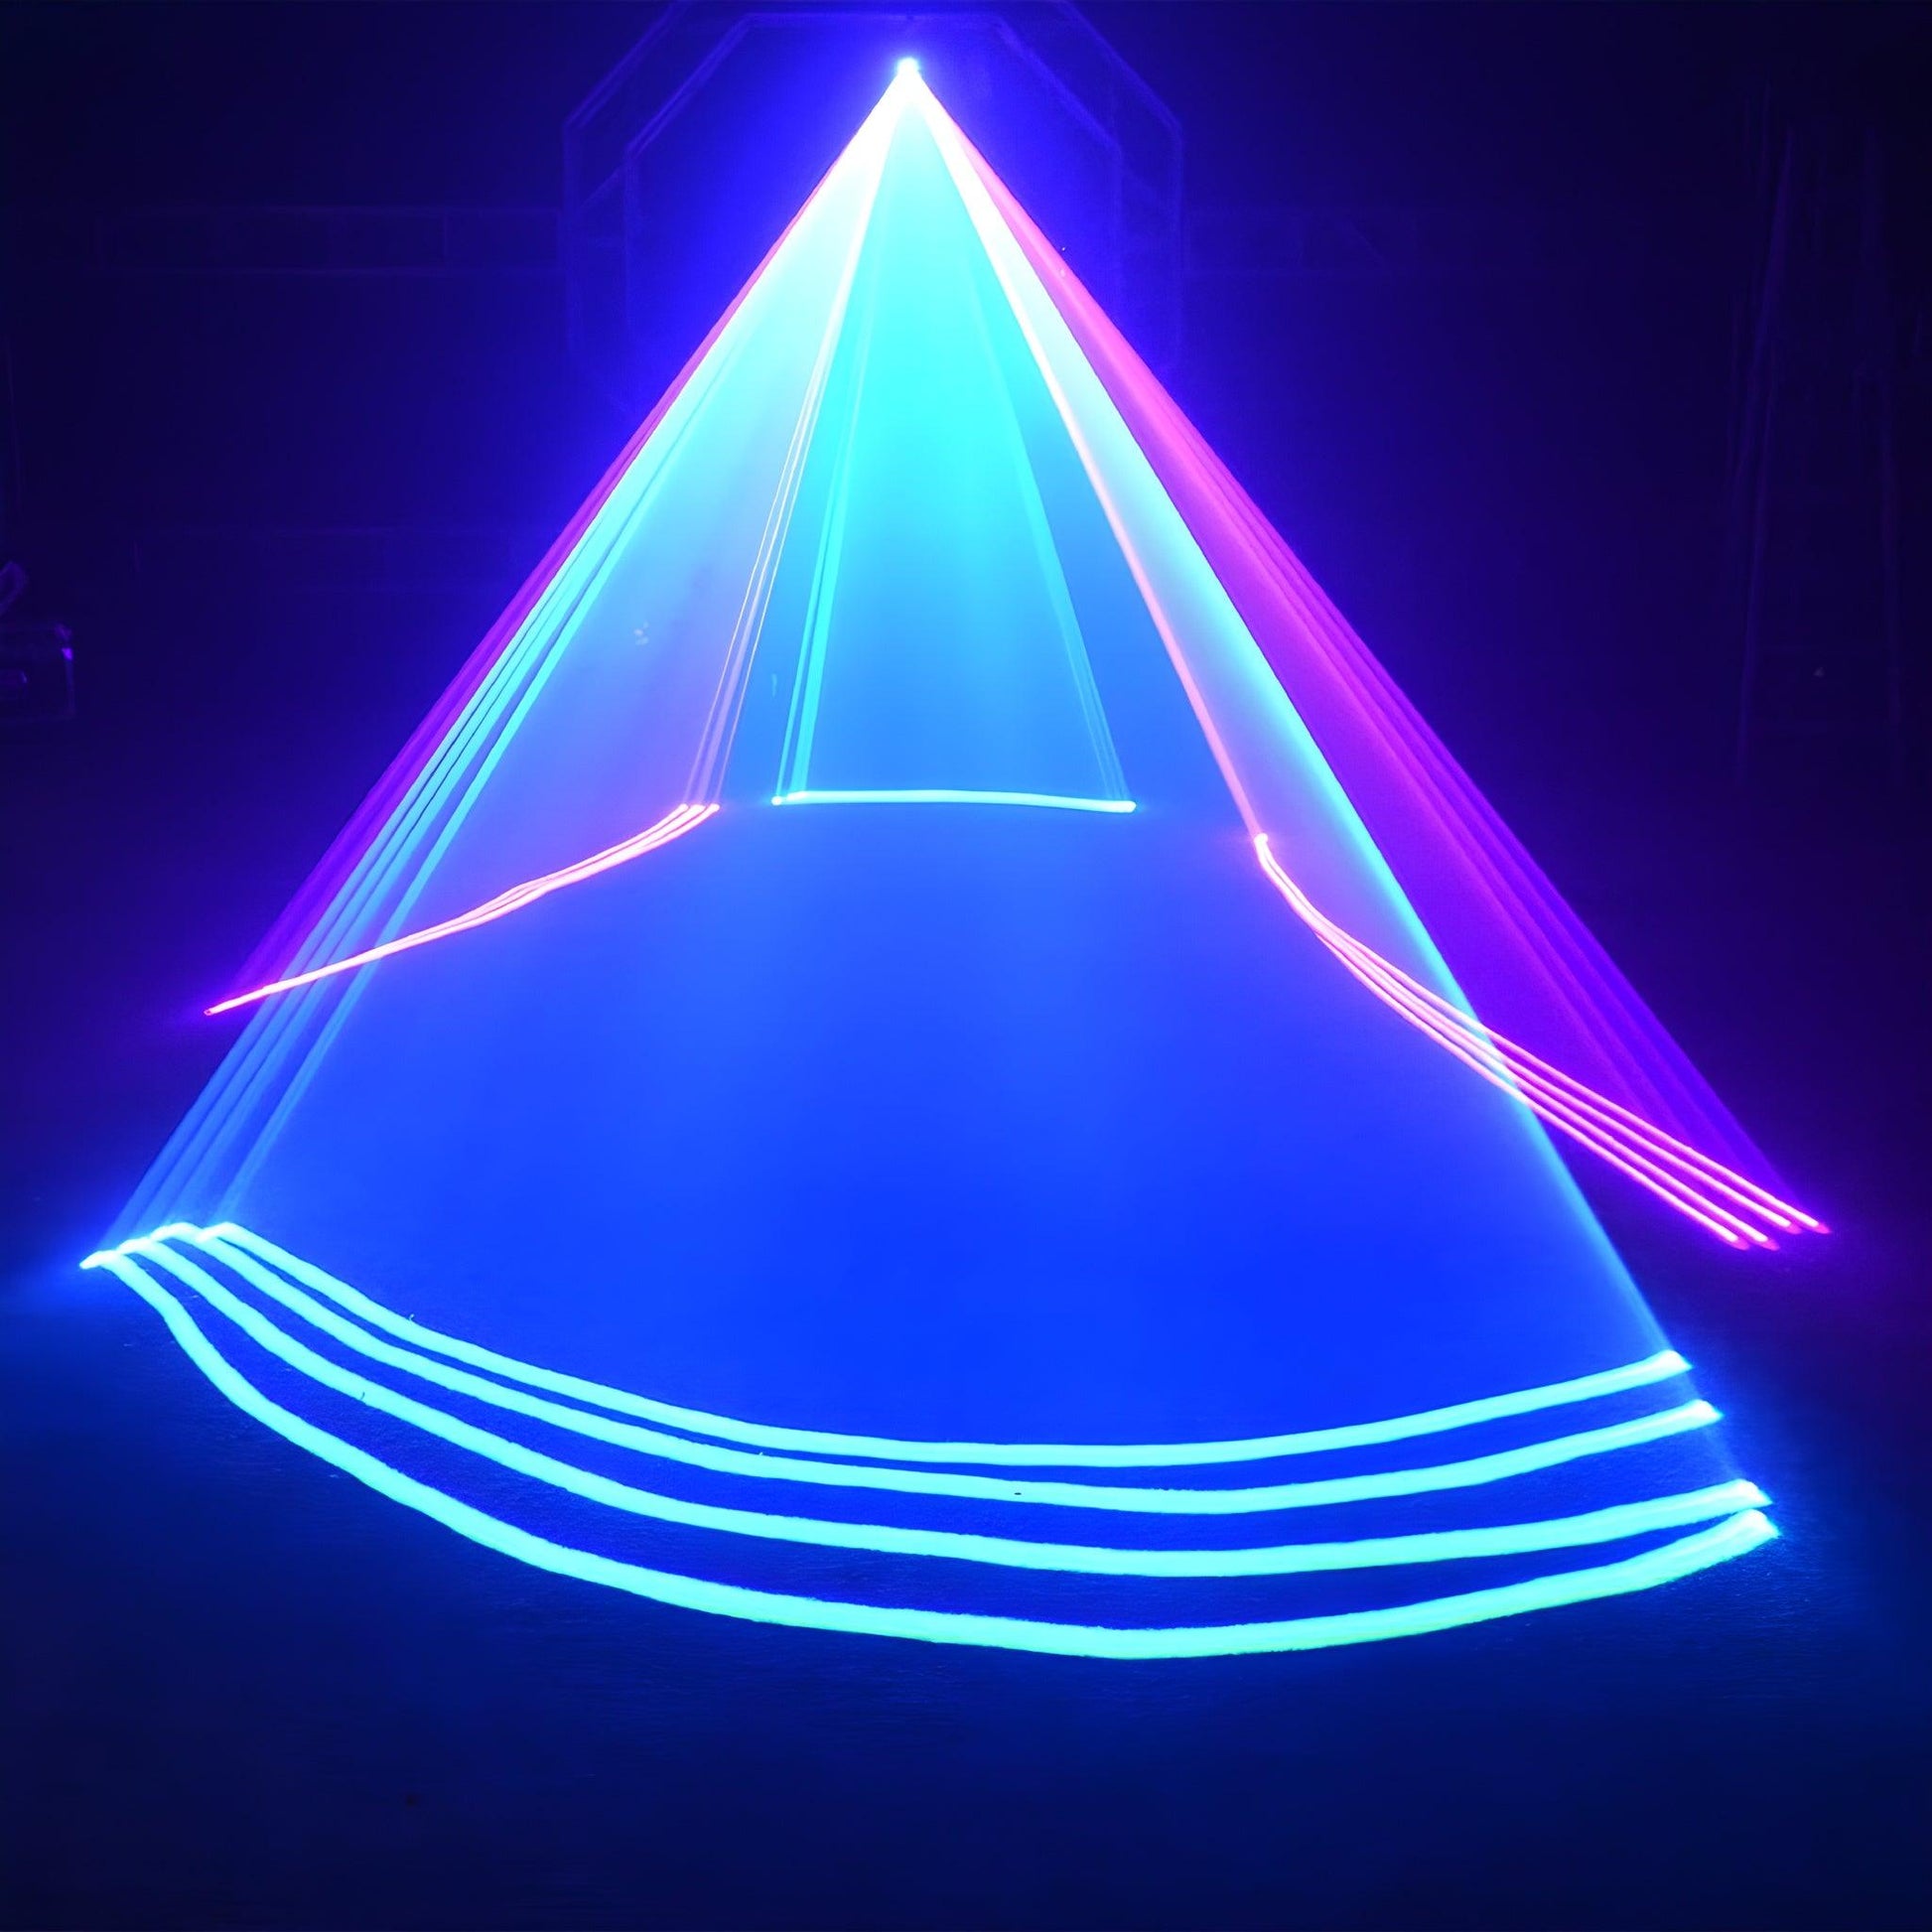 Proyector Láser De Alta Potencia Color De Luz Azul / IRM Mod